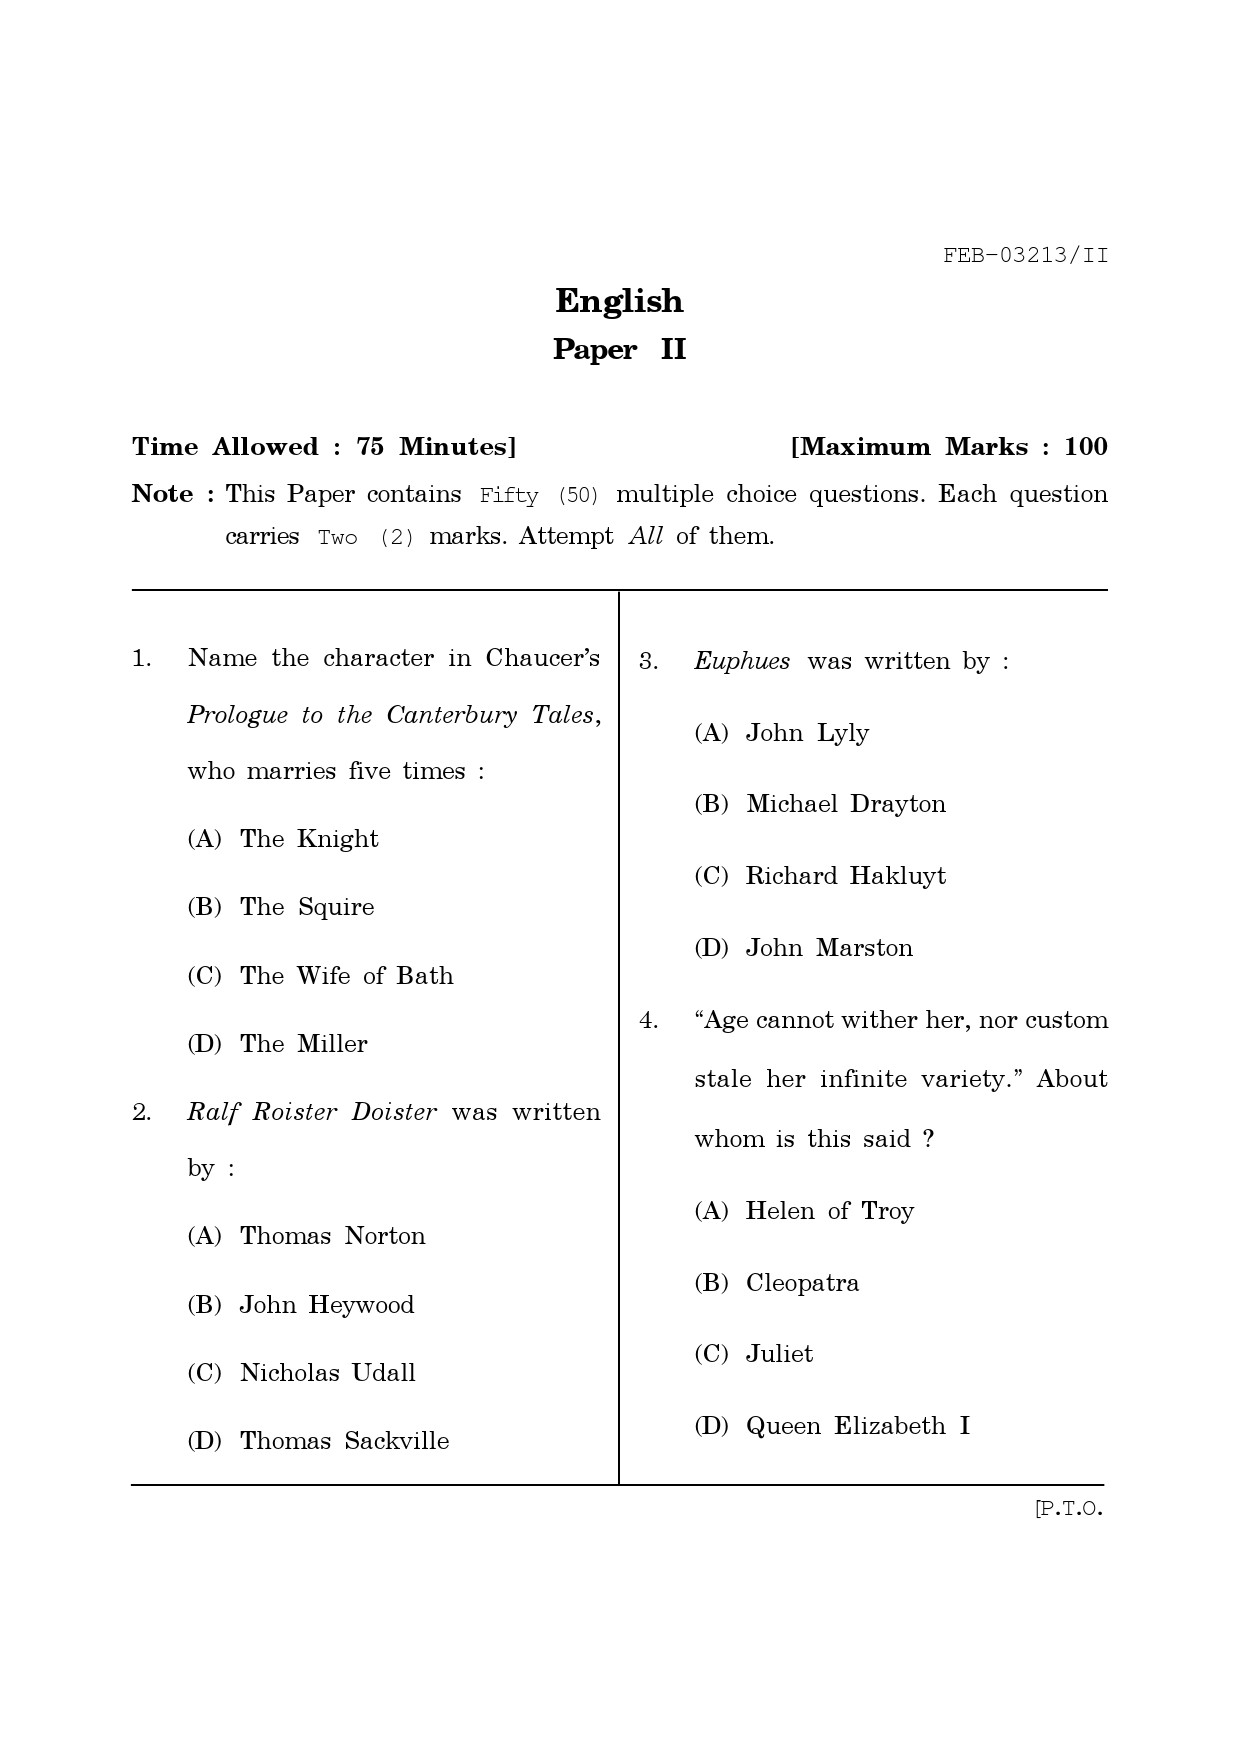 Maharashtra SET English Question Paper II February 2013 1